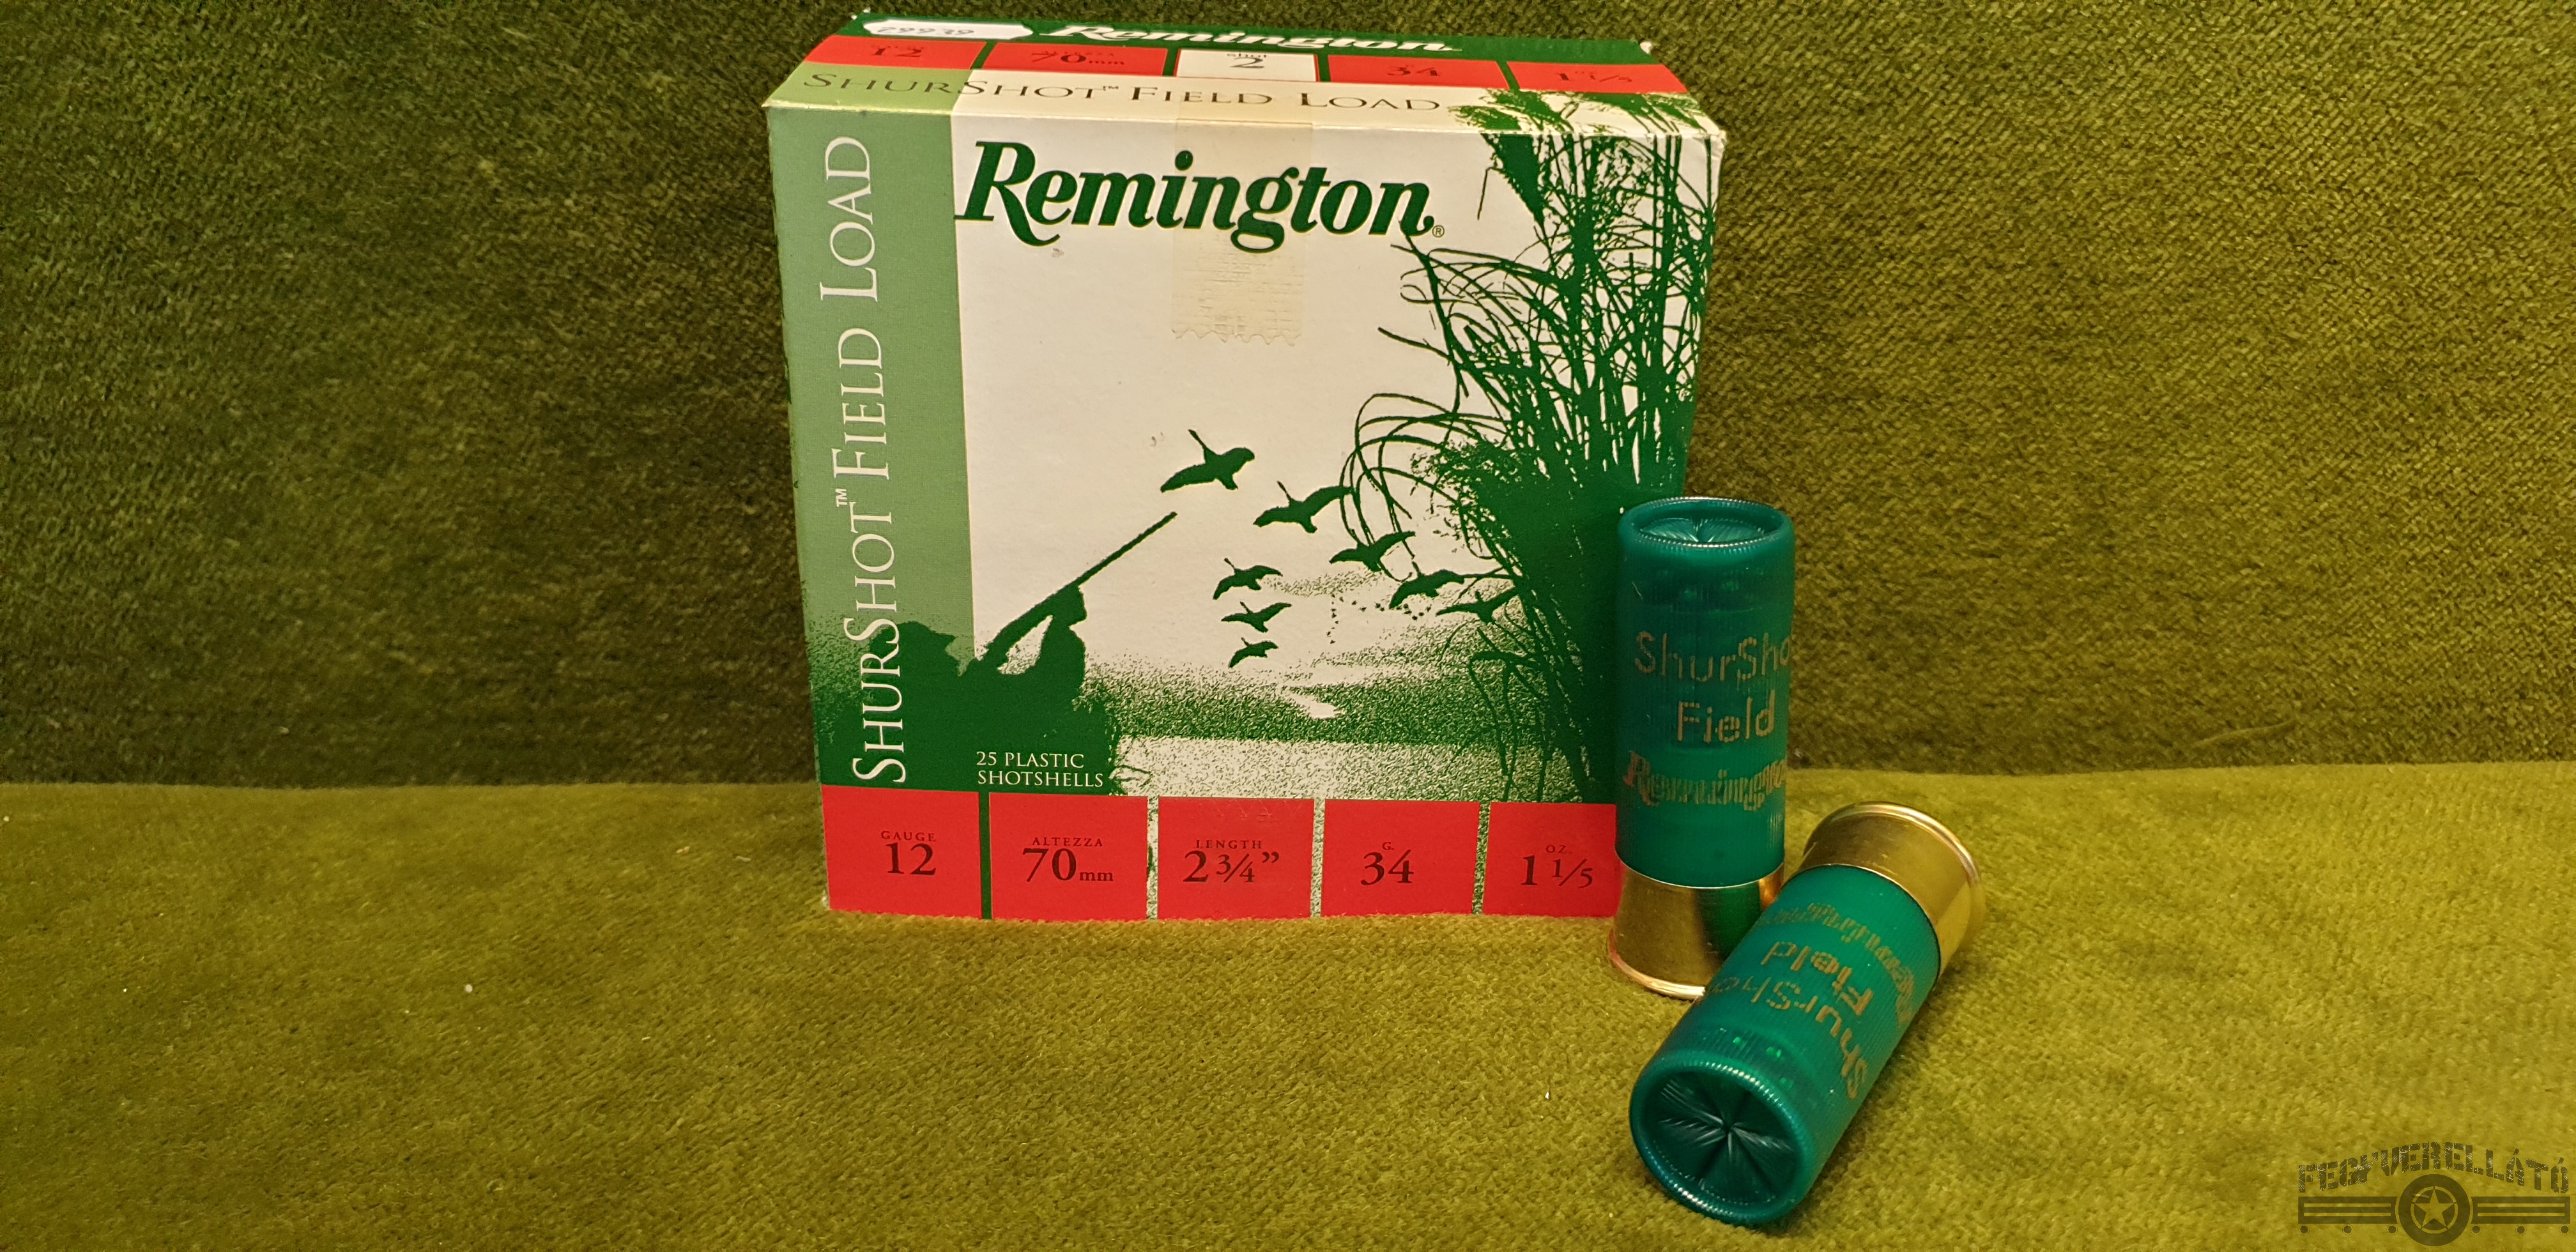 Remington, 12/70, 3,5mm, 34g